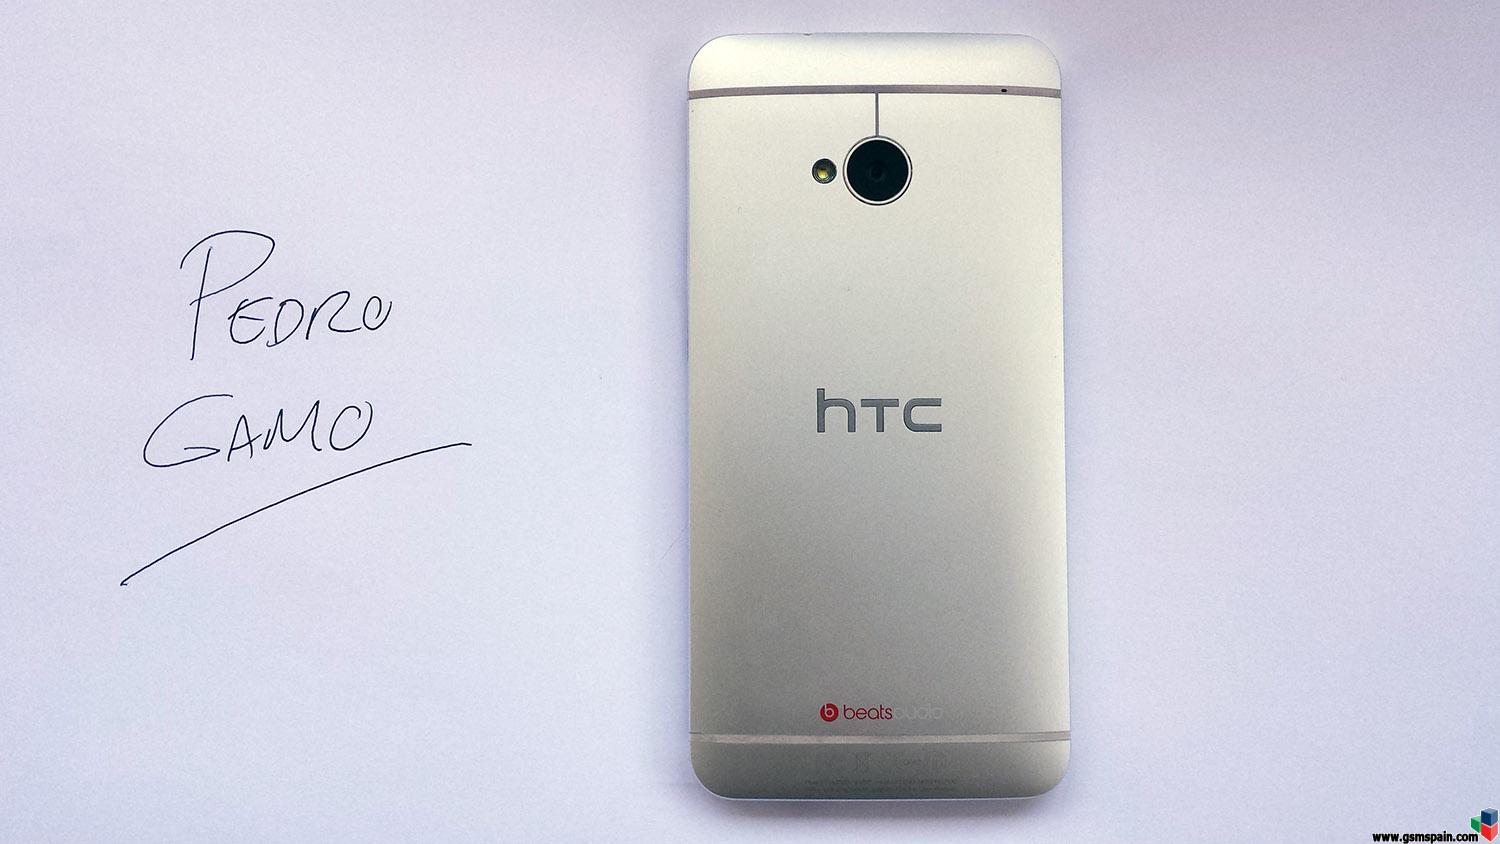 [VENDO] HTC ONE 32GB Impoluto